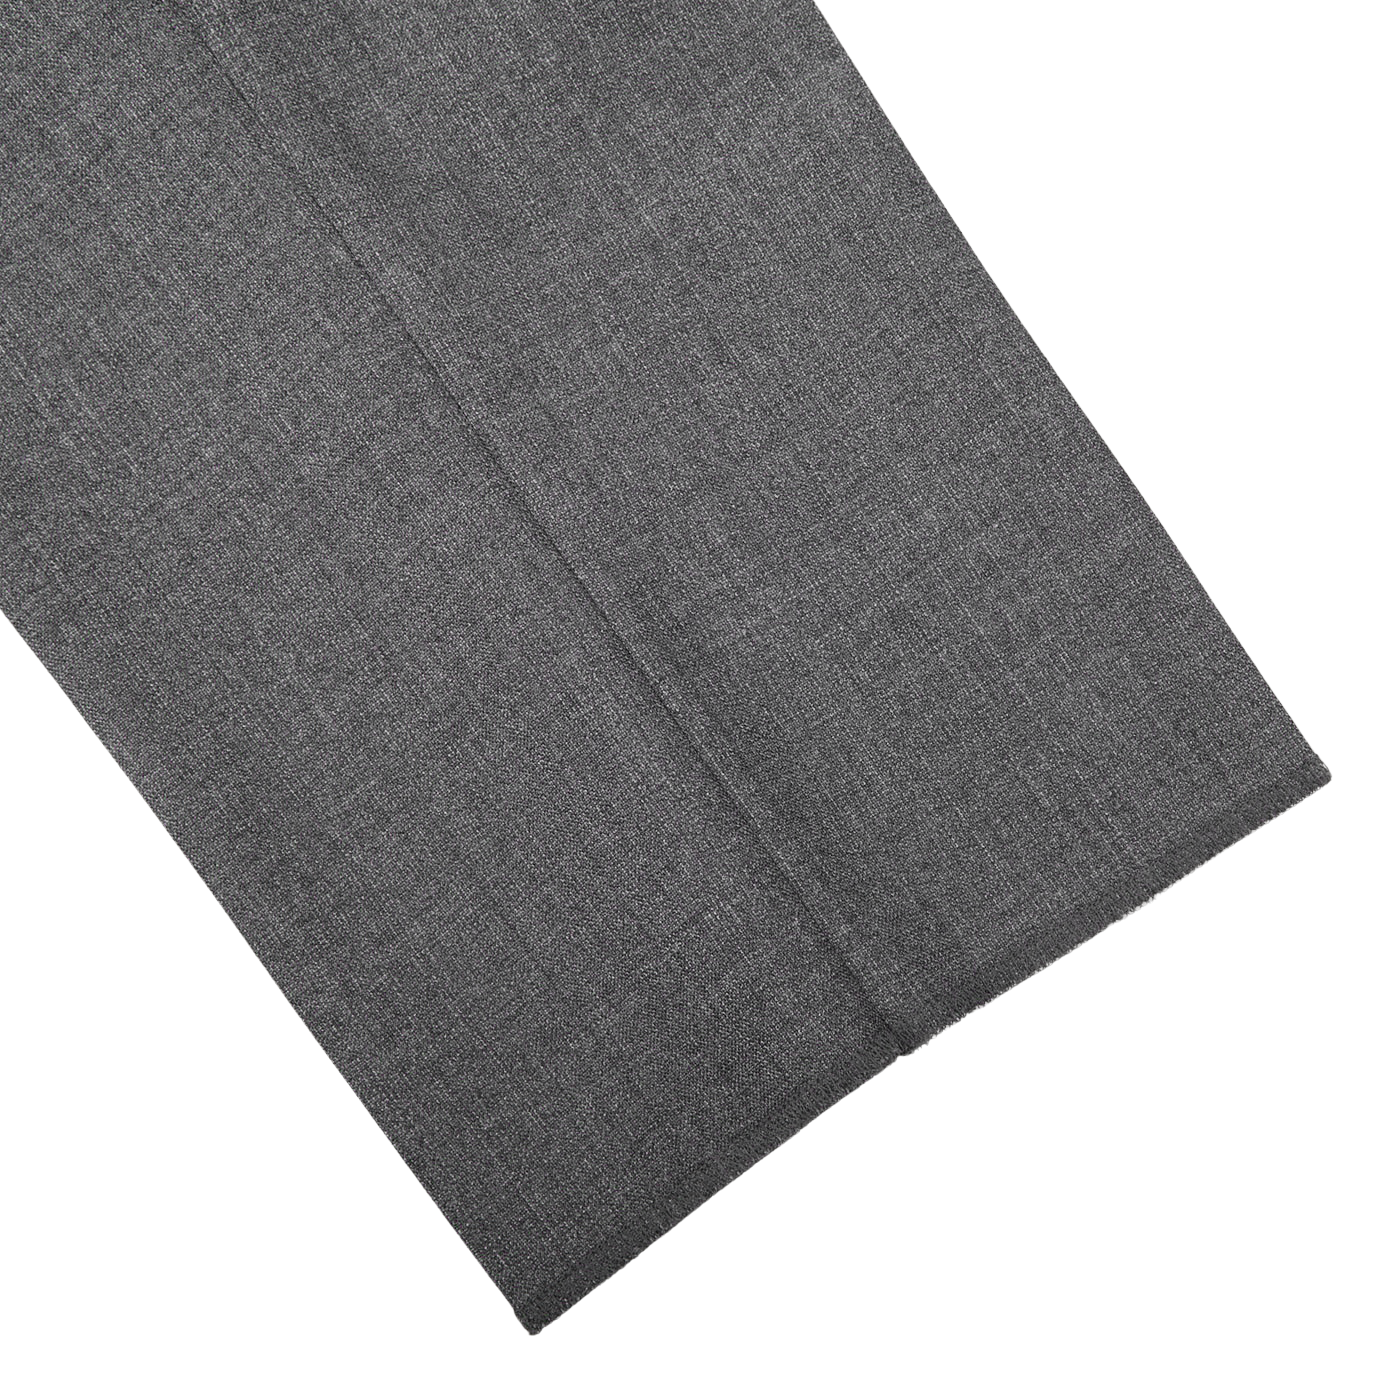 Canali Grey Melange Diagonal Wool Trousers Cuff